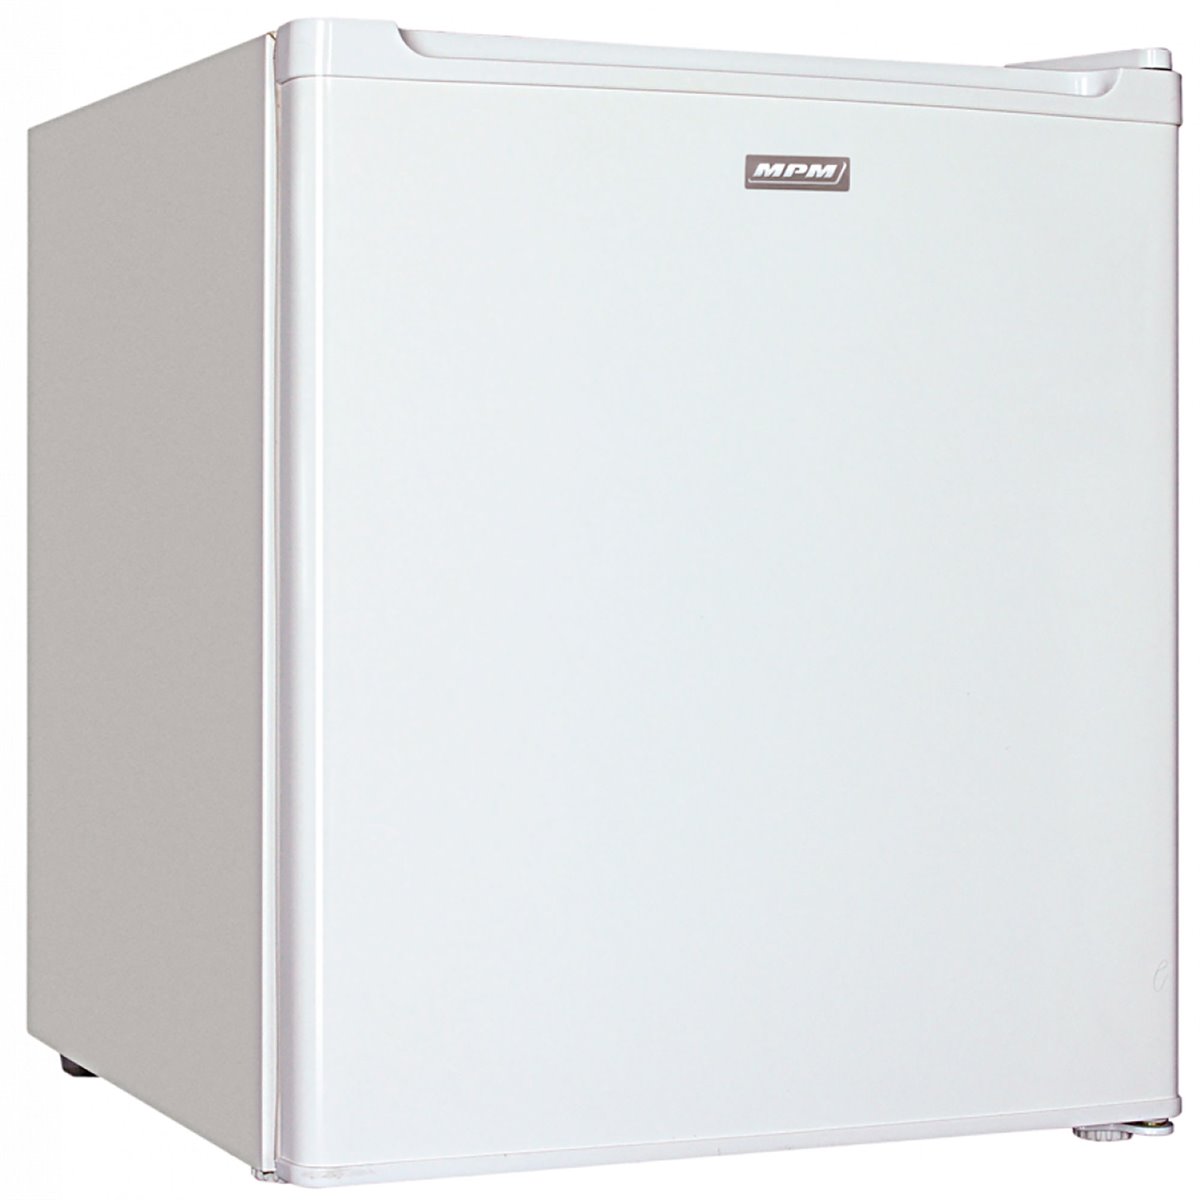 Mini Congelador Vertical Infiniton CV-A52B , Blanco, 33 litros,51cm , A++ /  E - Conforama